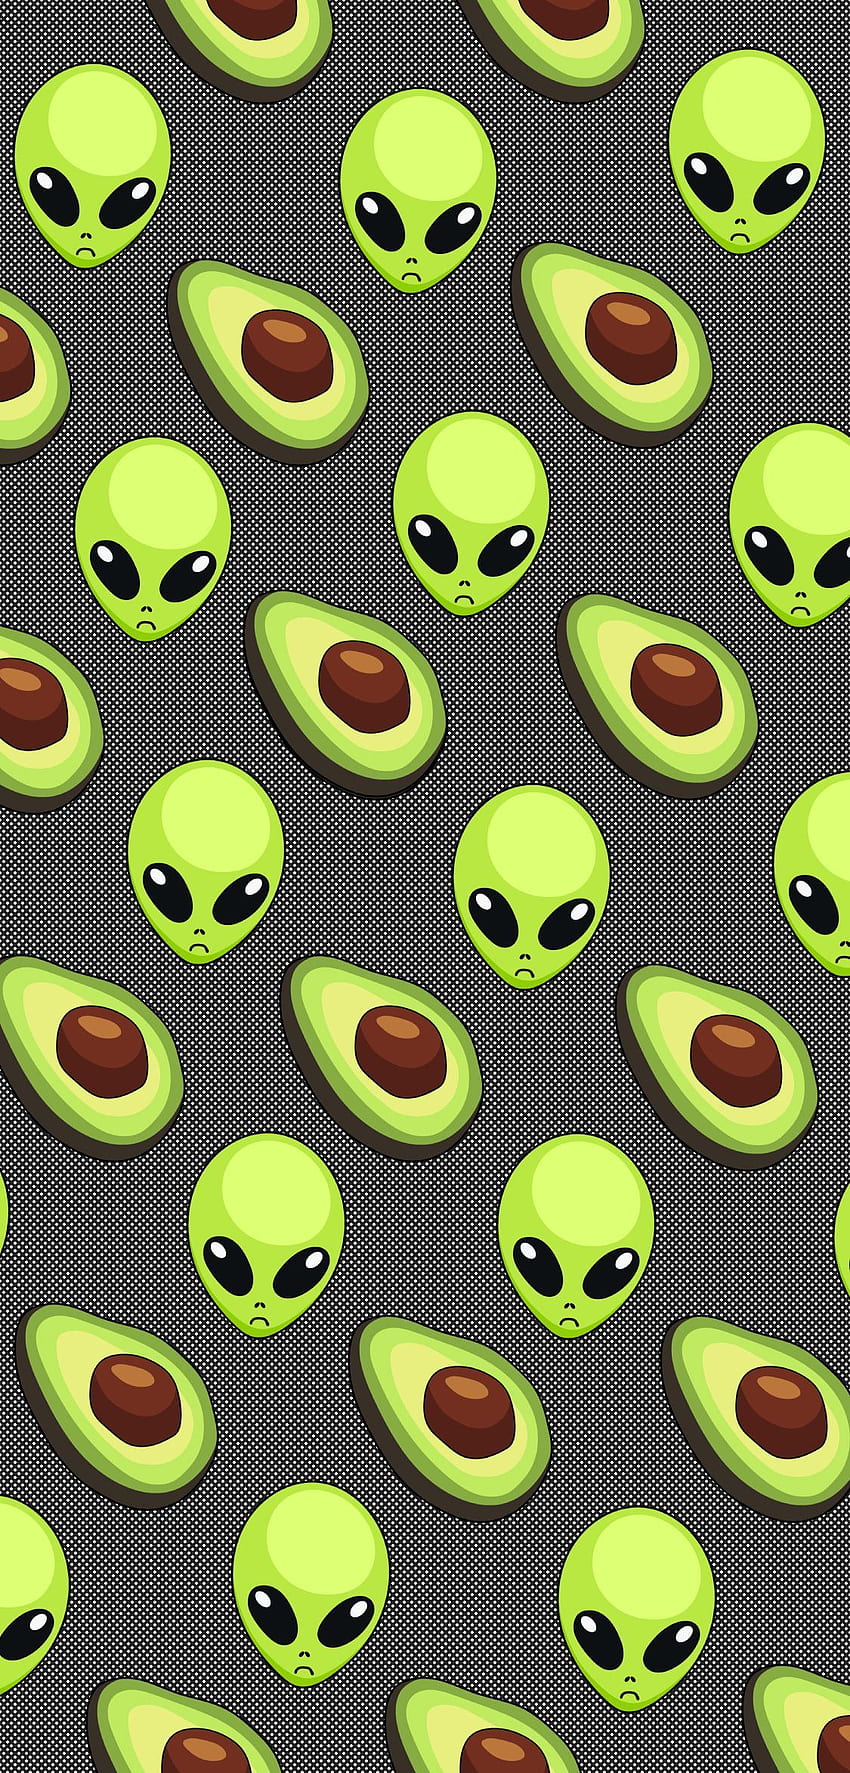 VSCO Girl Avocado and Alien Phone in 2020. iPhone quotes funny, Avocado cartoon, Black phone, Cool Green Alien HD電話の壁紙